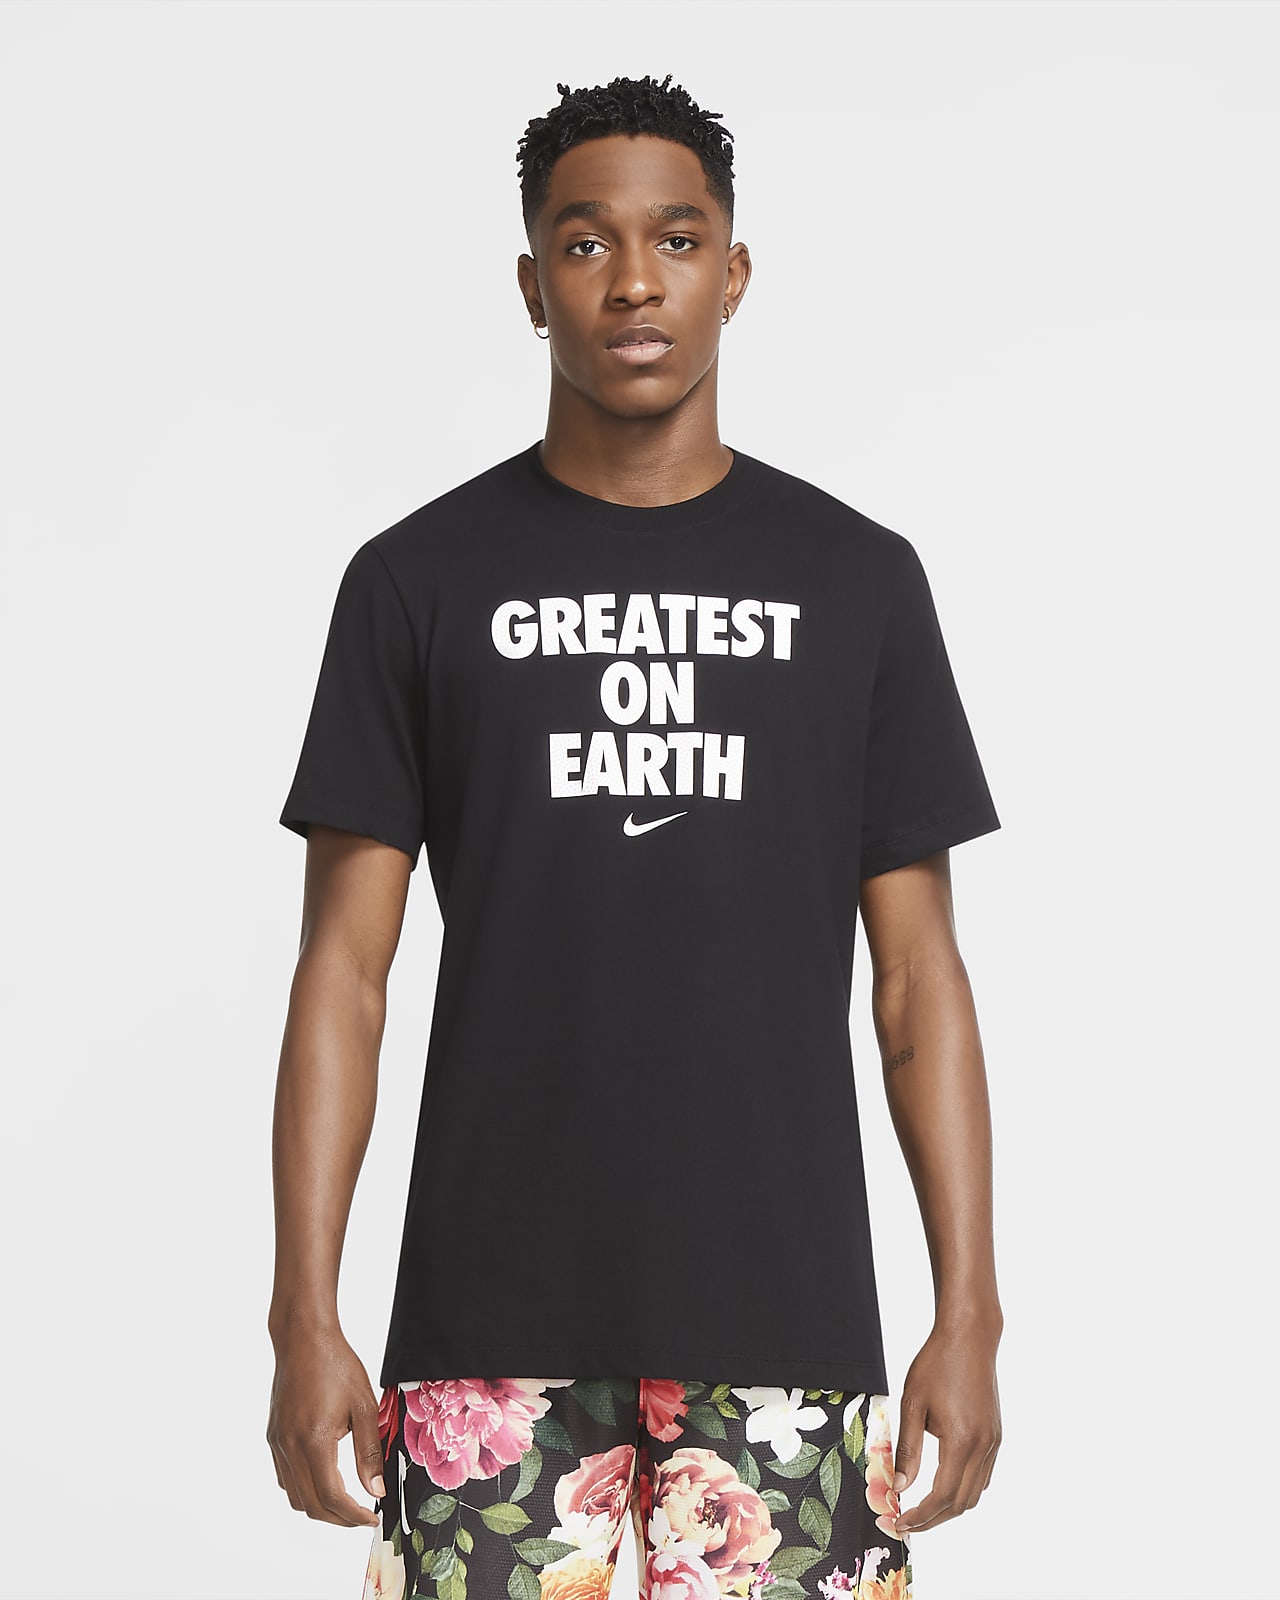 Nike Dri-FIT "Greatest On Earth" Men's Basketball T-Shirt